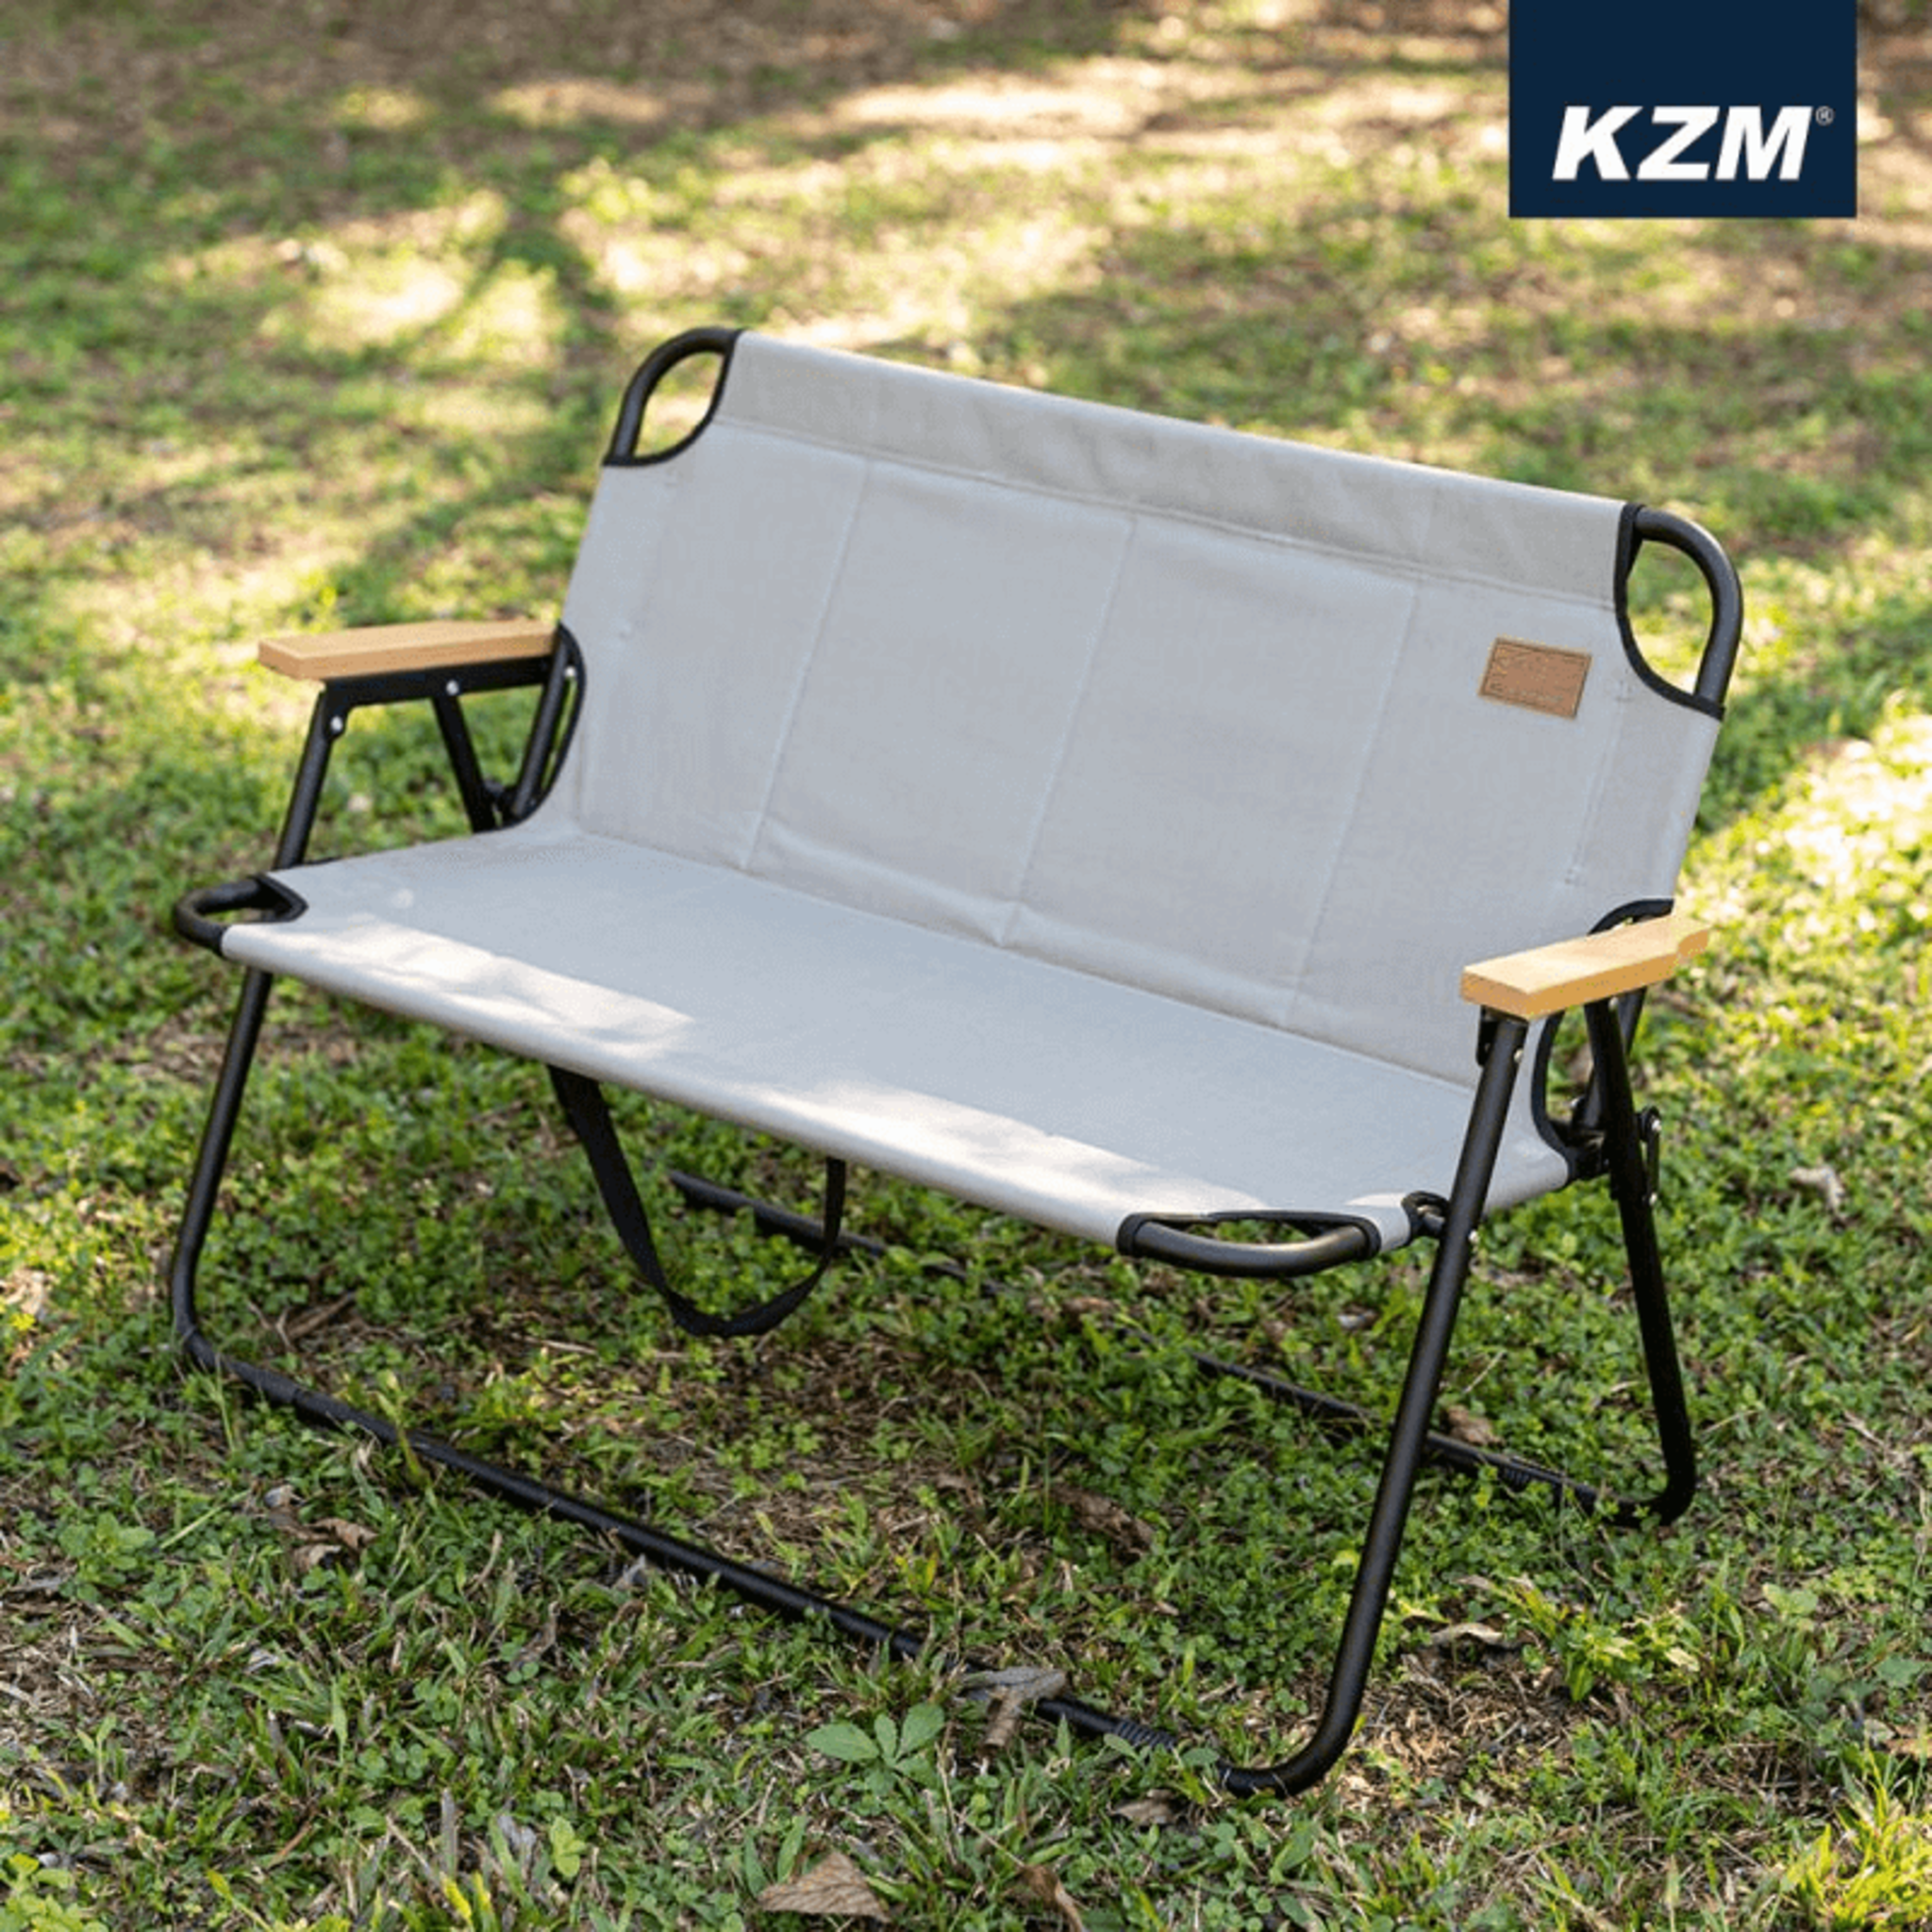 KAZMI KZM 素面雙人折疊椅 K20T1C014